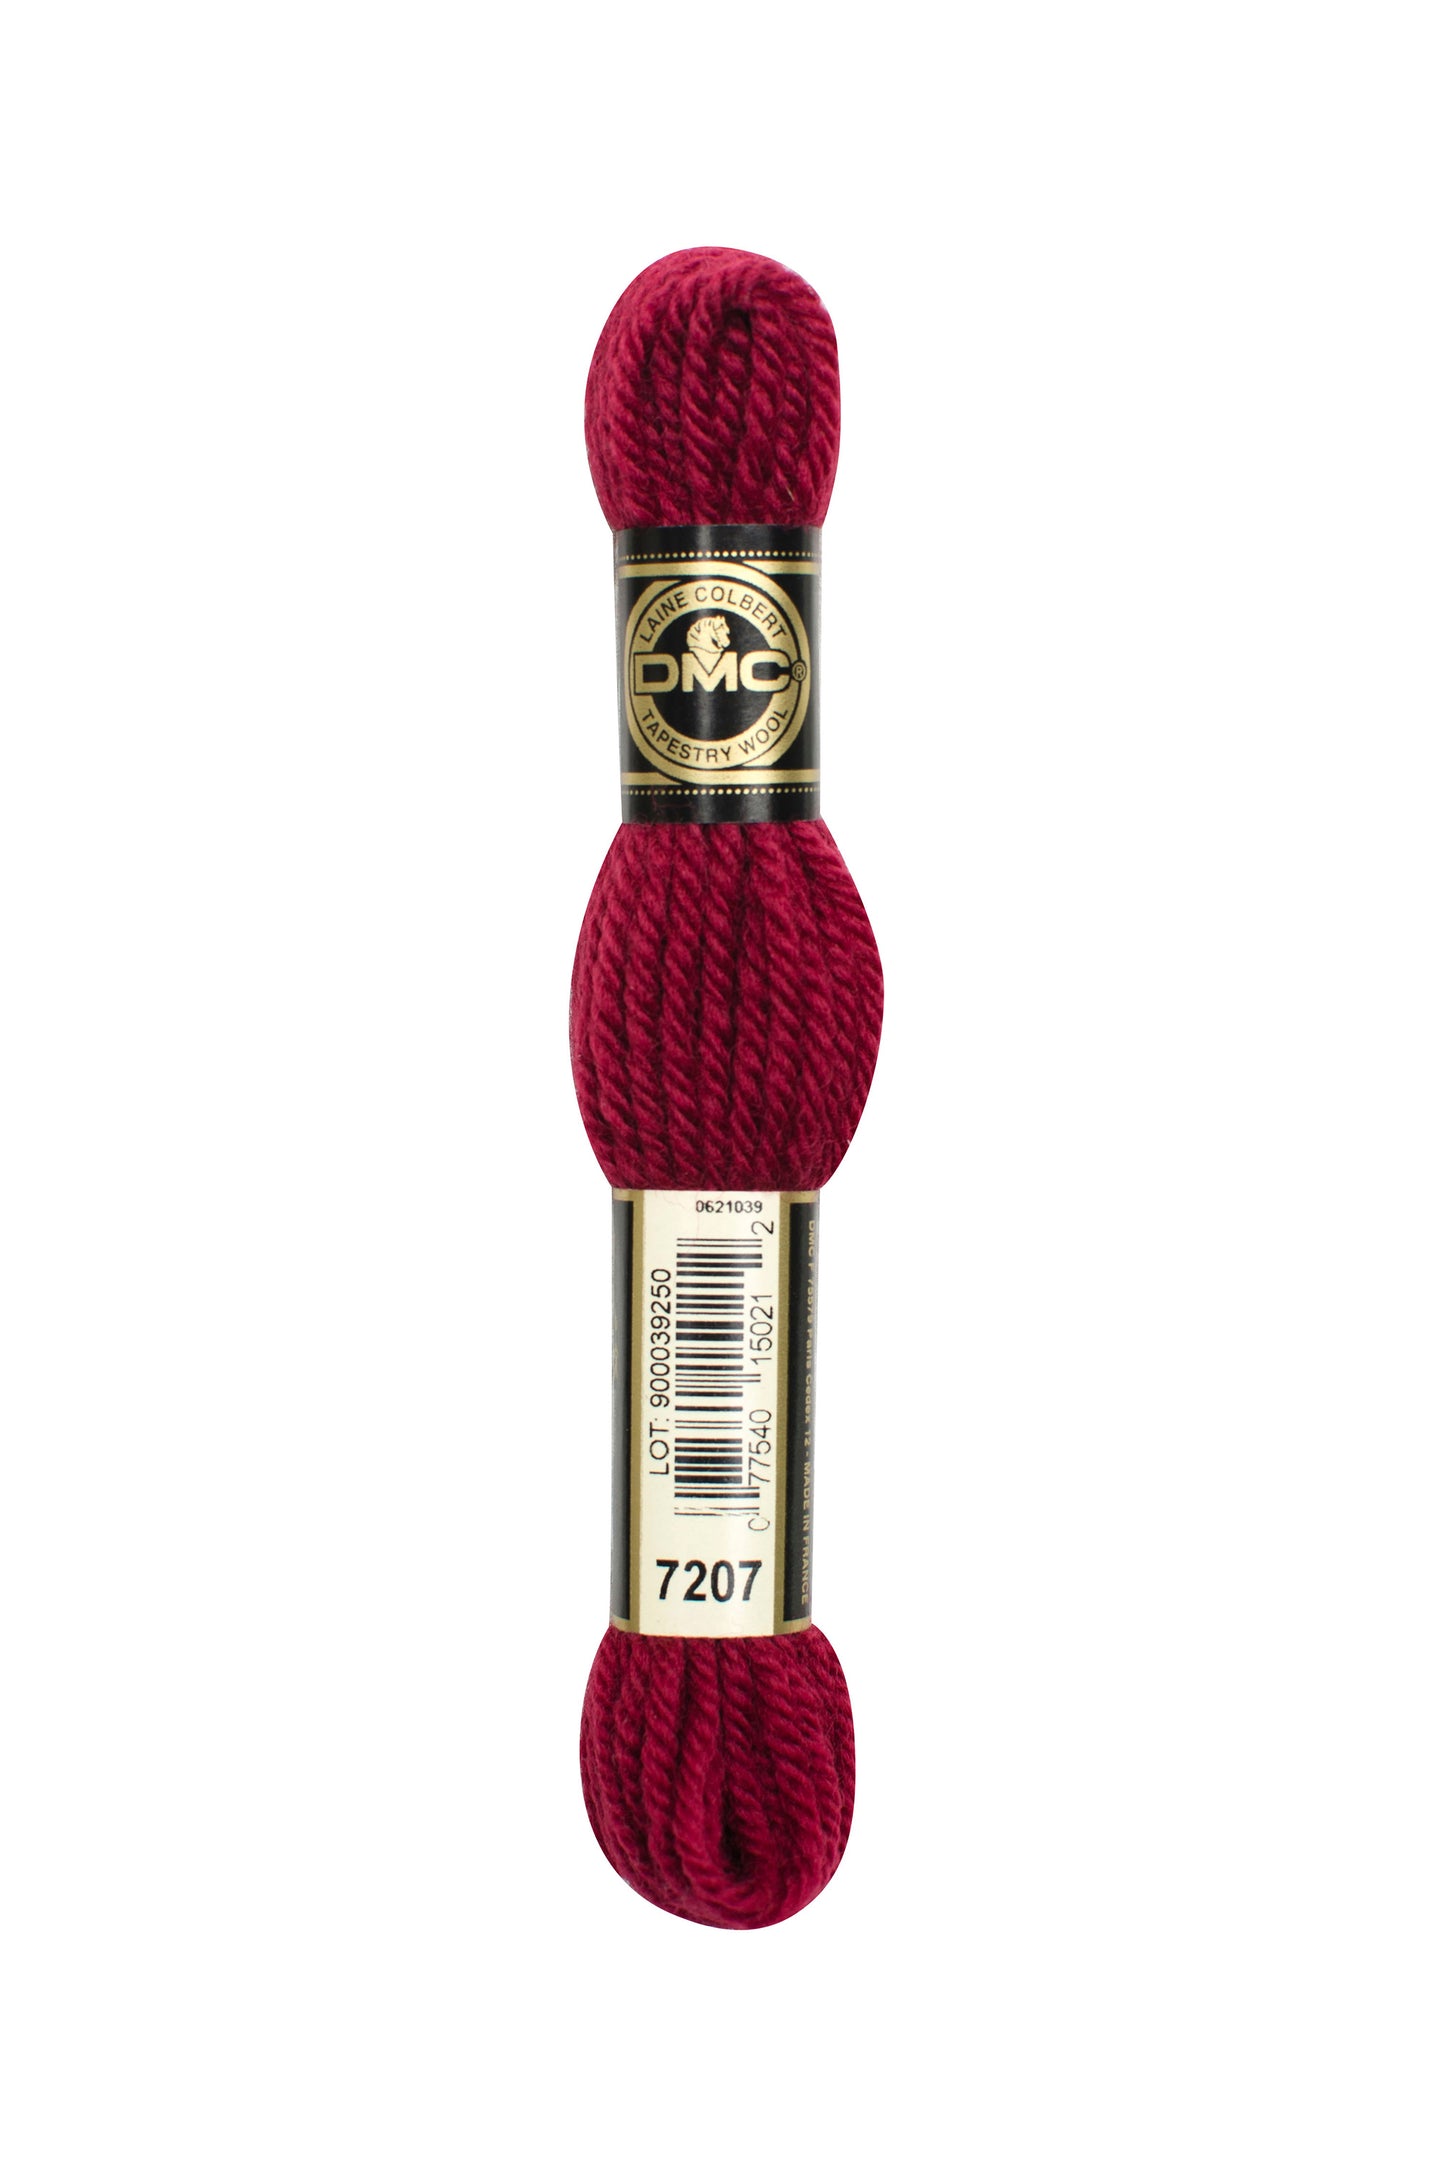 7207 – DMC Tapestry Wool